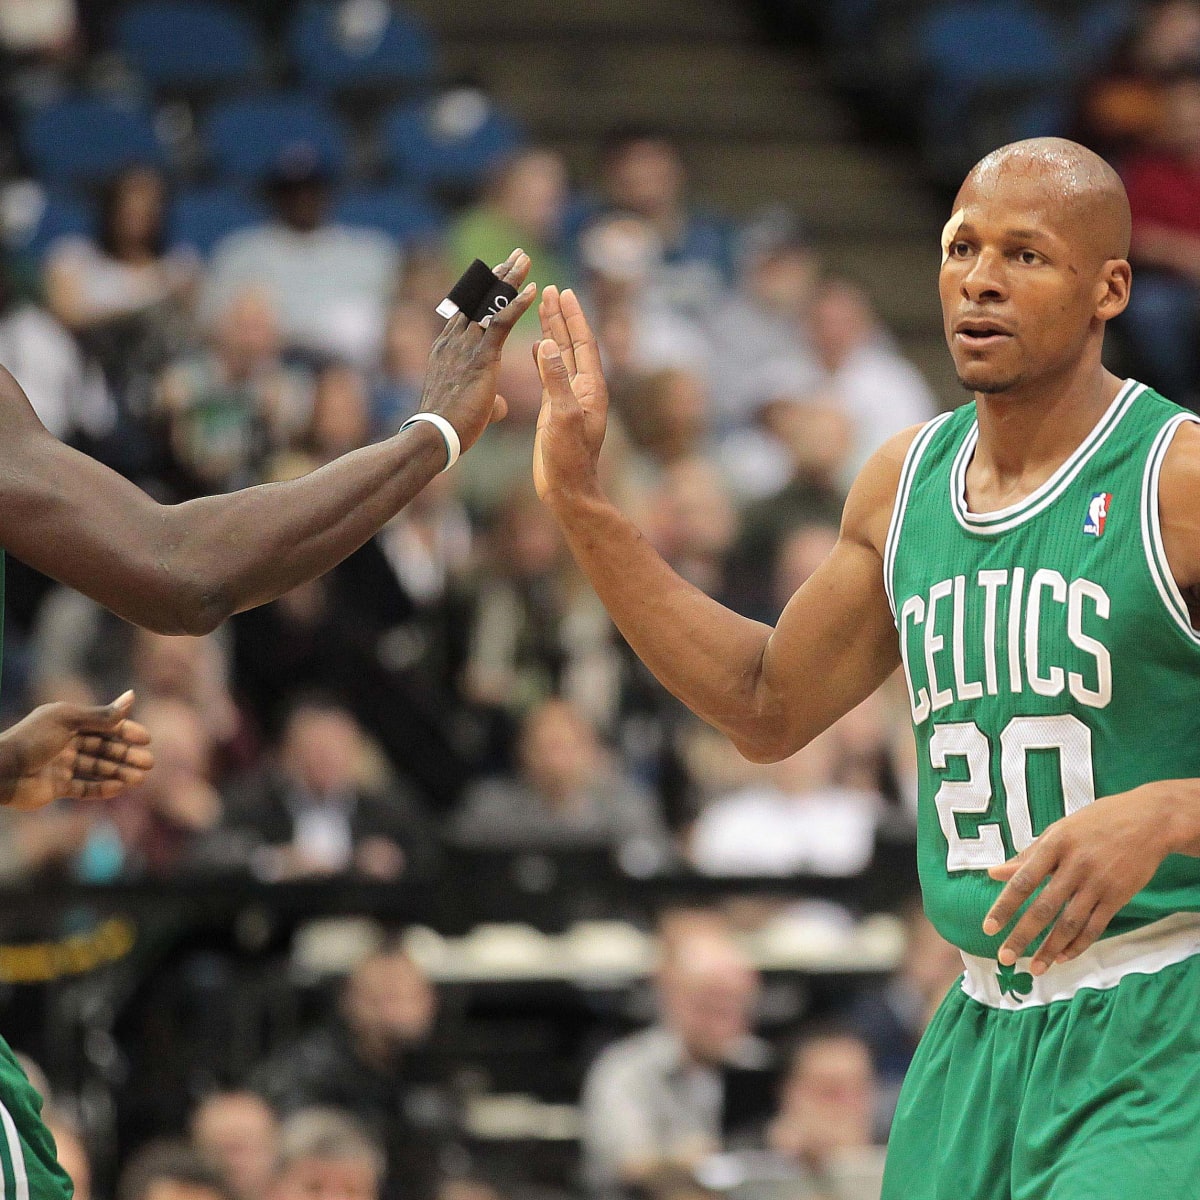 Kevin Garnett humbled as Celtics prepare to retire his jersey